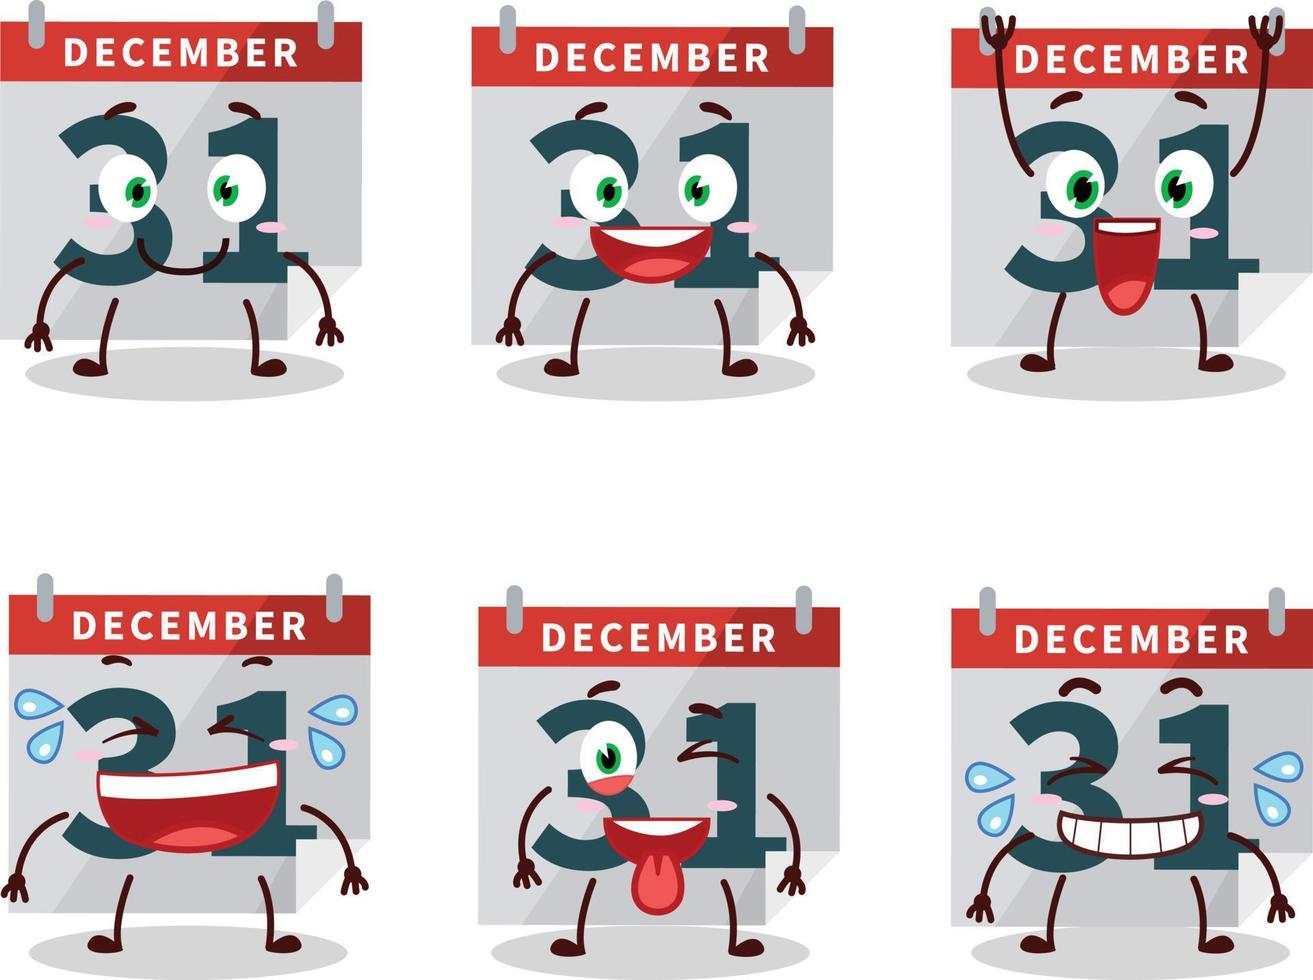 tekenfilm karakter van december 31e kalender met glimlach uitdrukking vector